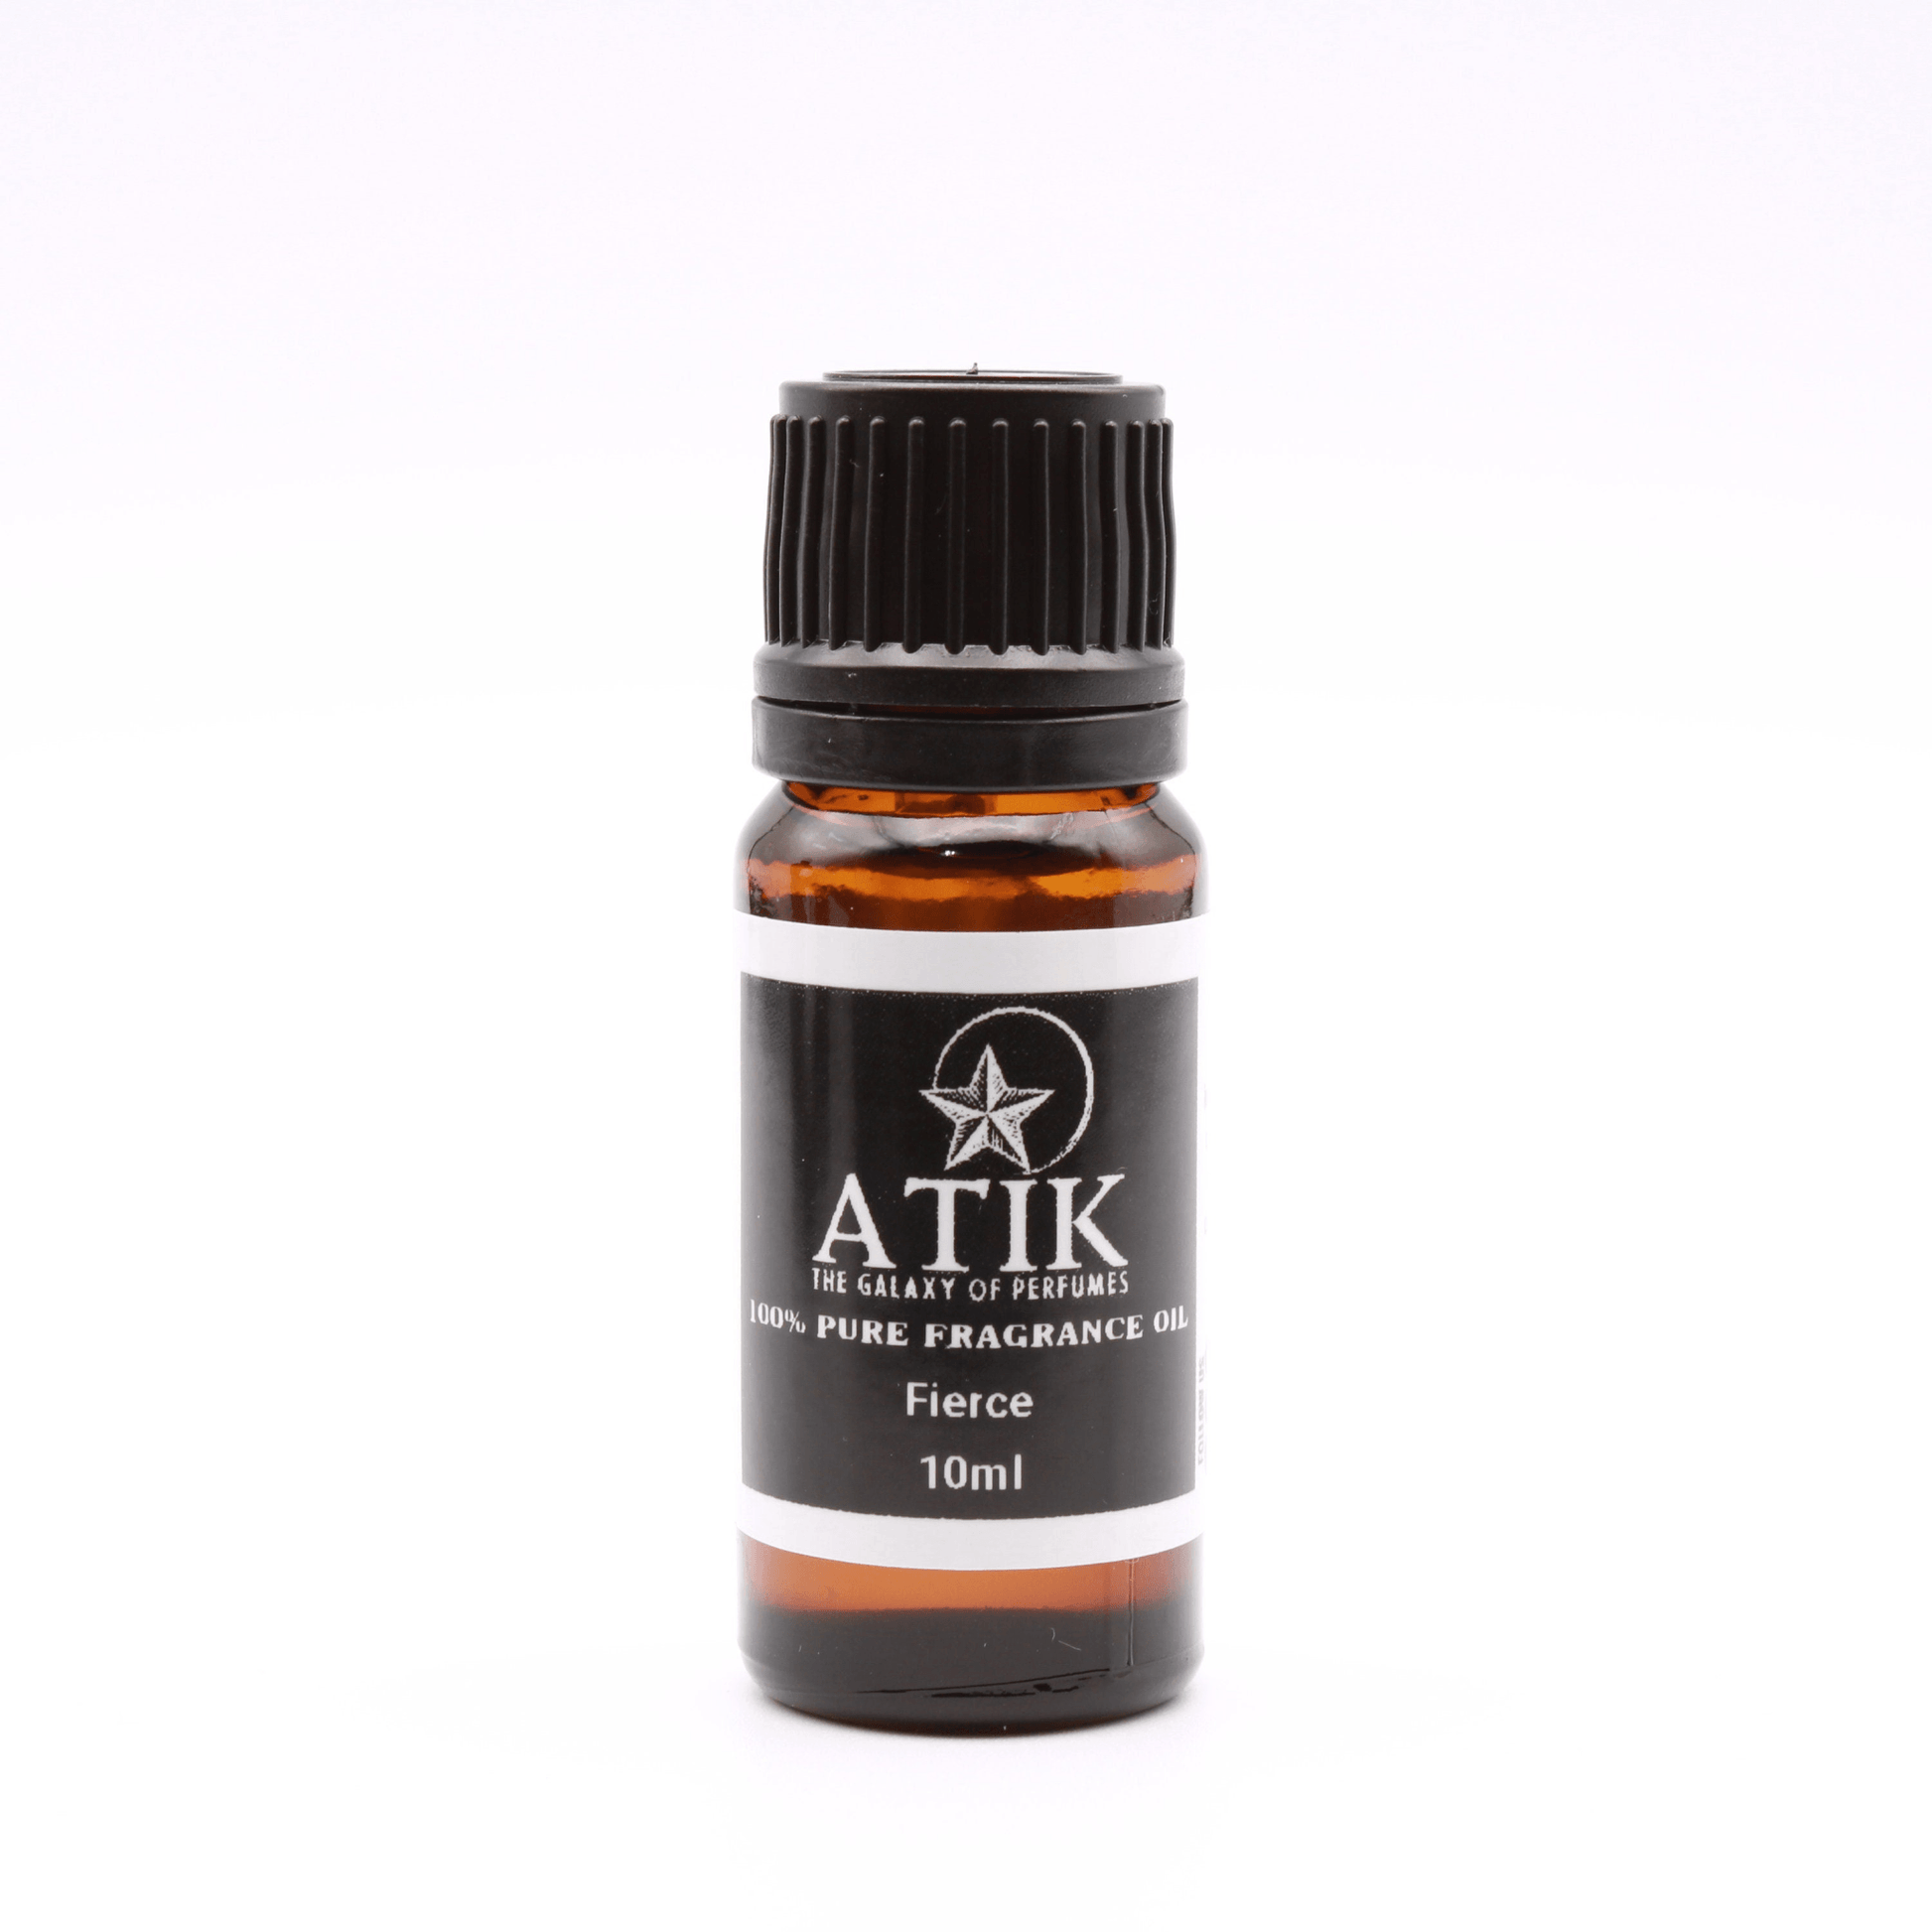 Fierce fragrance oil - Atik Perfumes